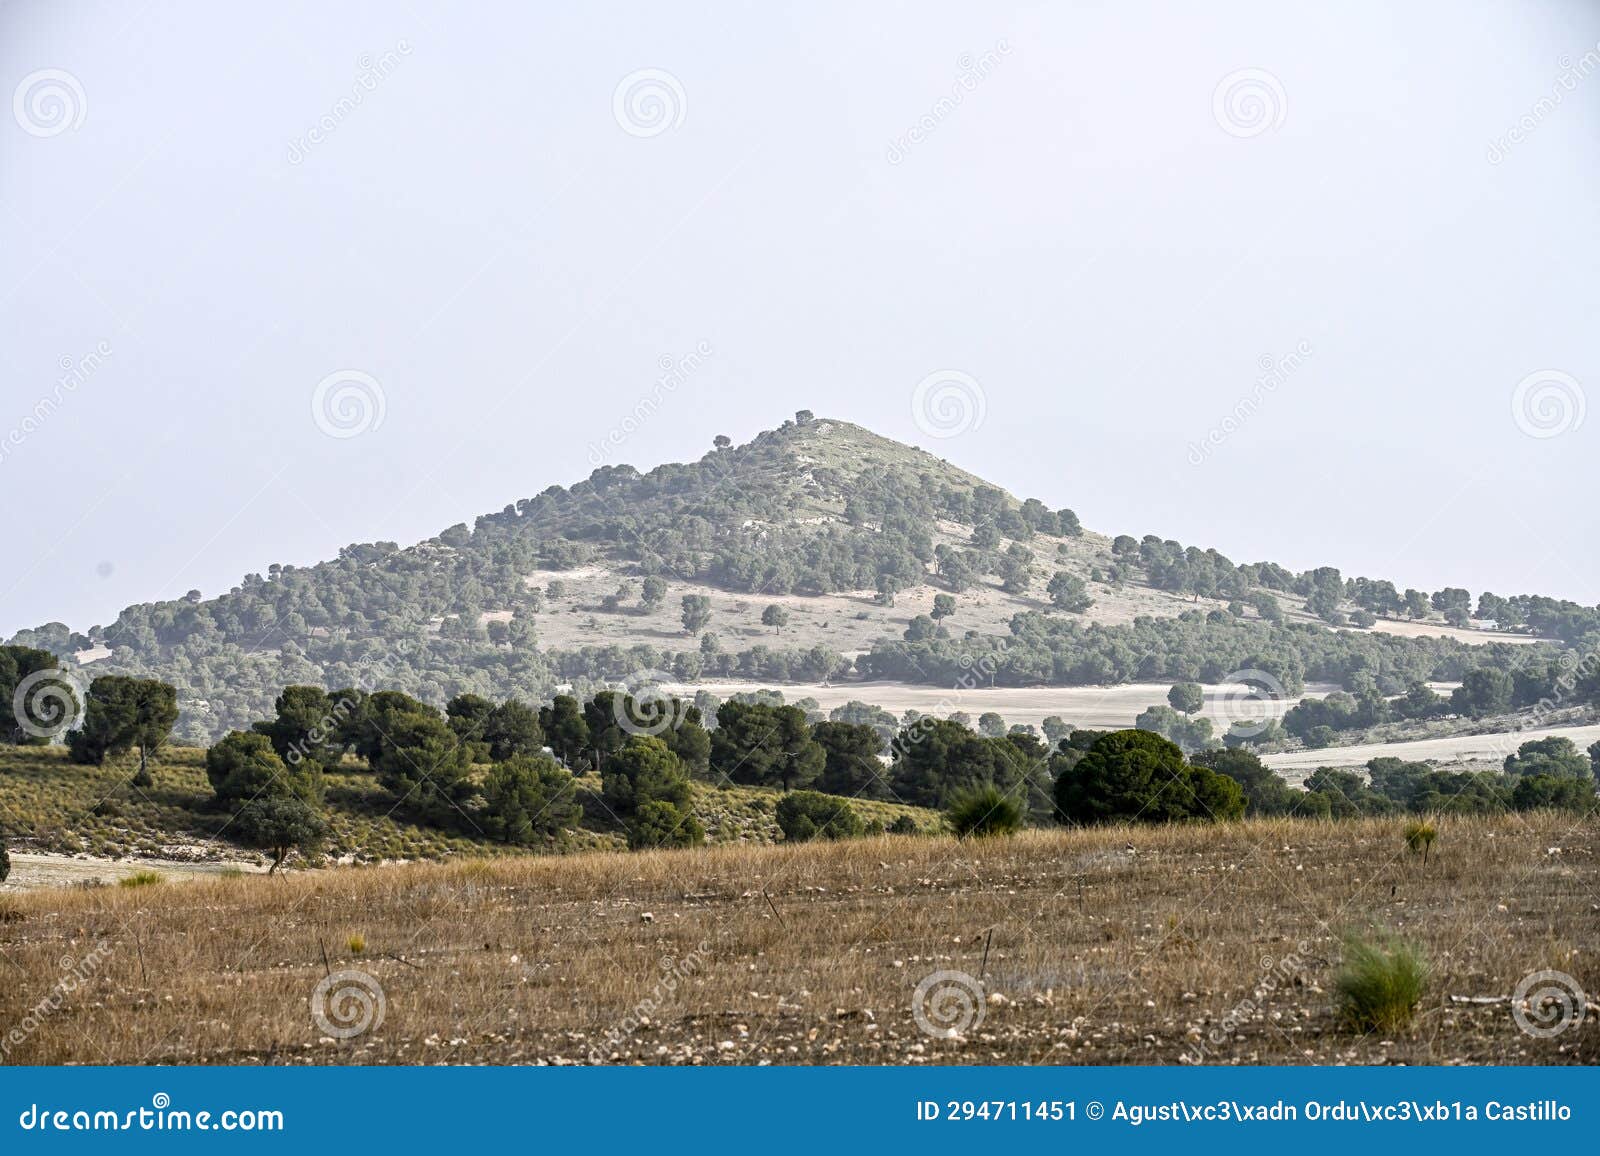 triangular mountain in the eastern mountains of granada.